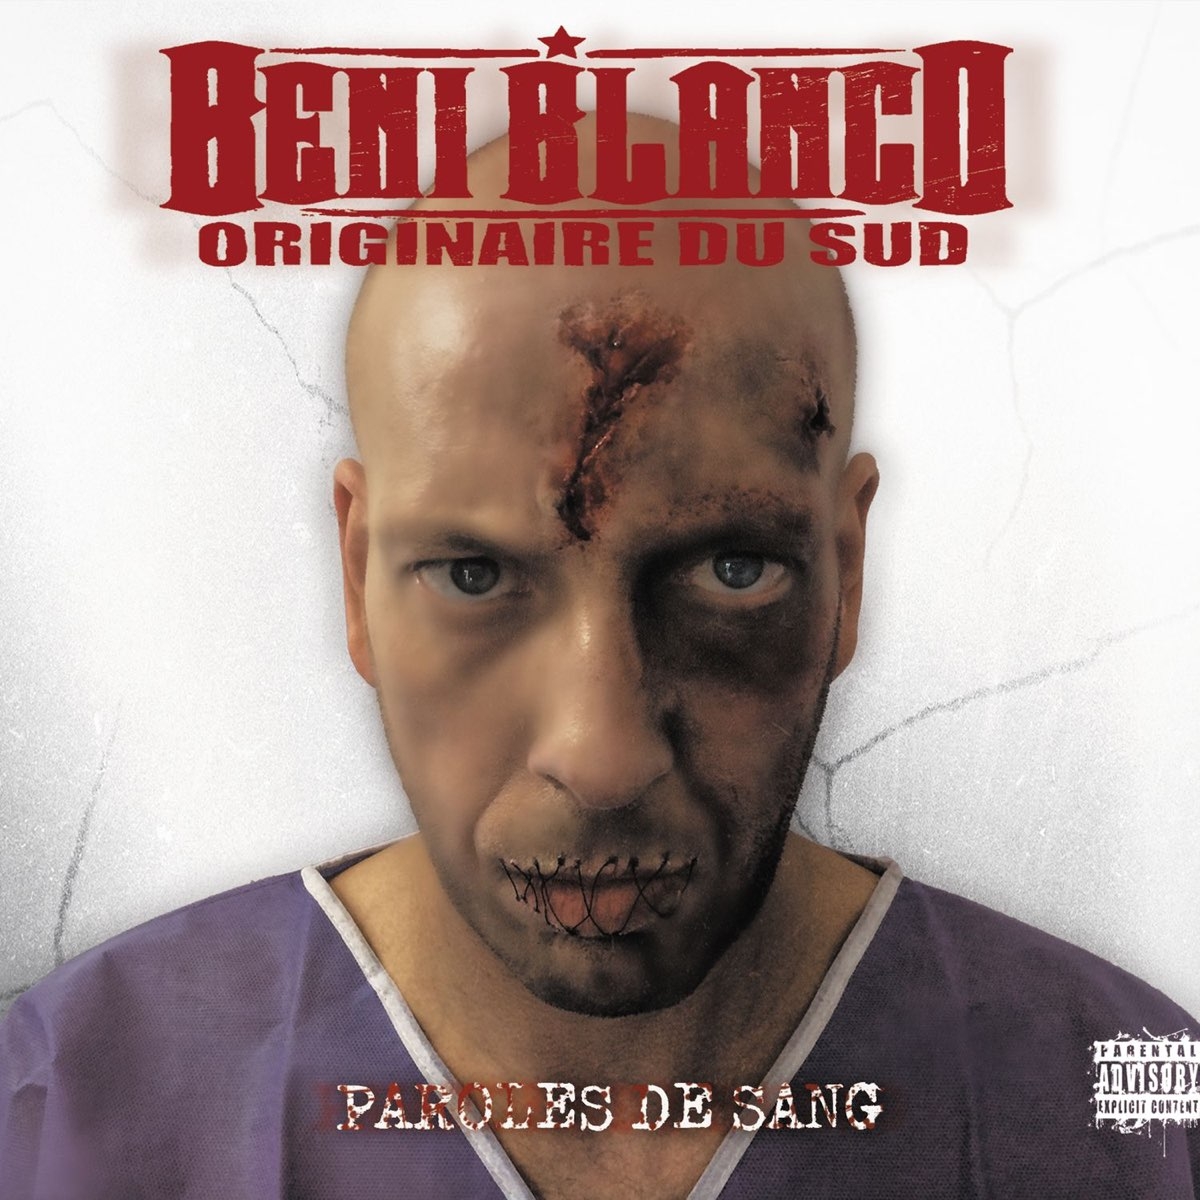 Album Cd "Beni Blanco - Originaire du Sud - Paroles de Sang" de beni blanco sur Scredboutique.com